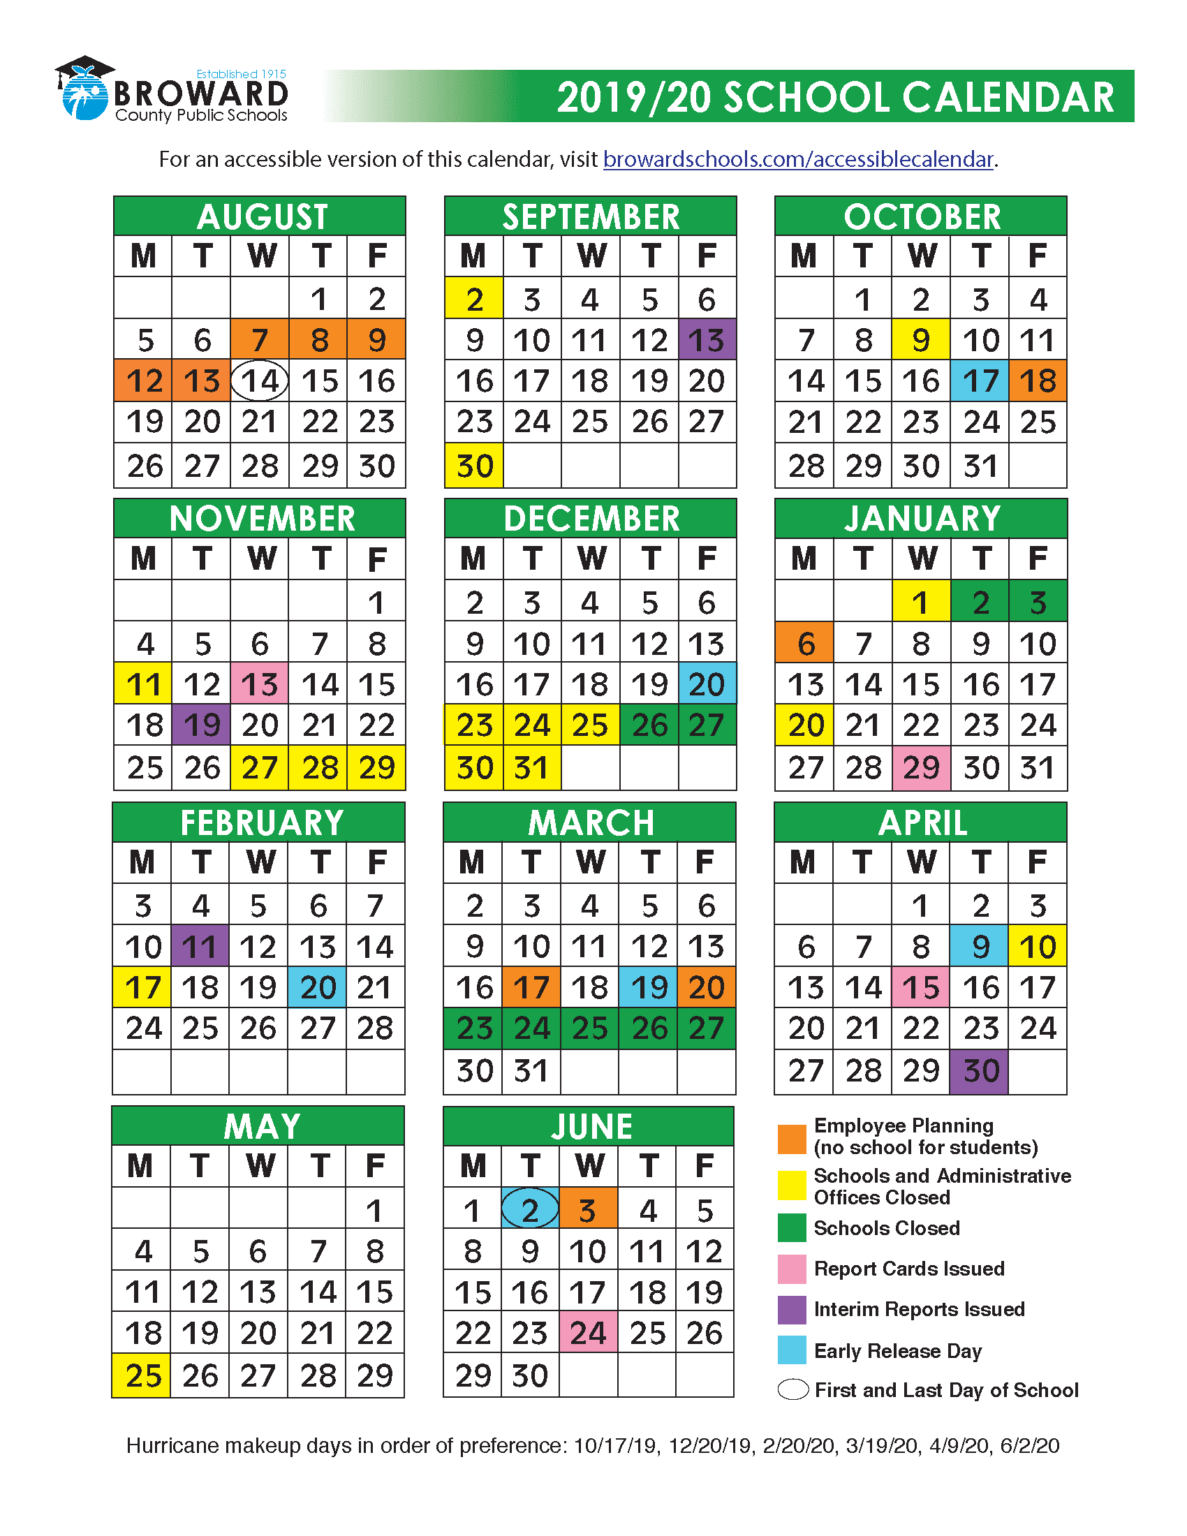 2019 Miami-Dade and Broward School Calendars